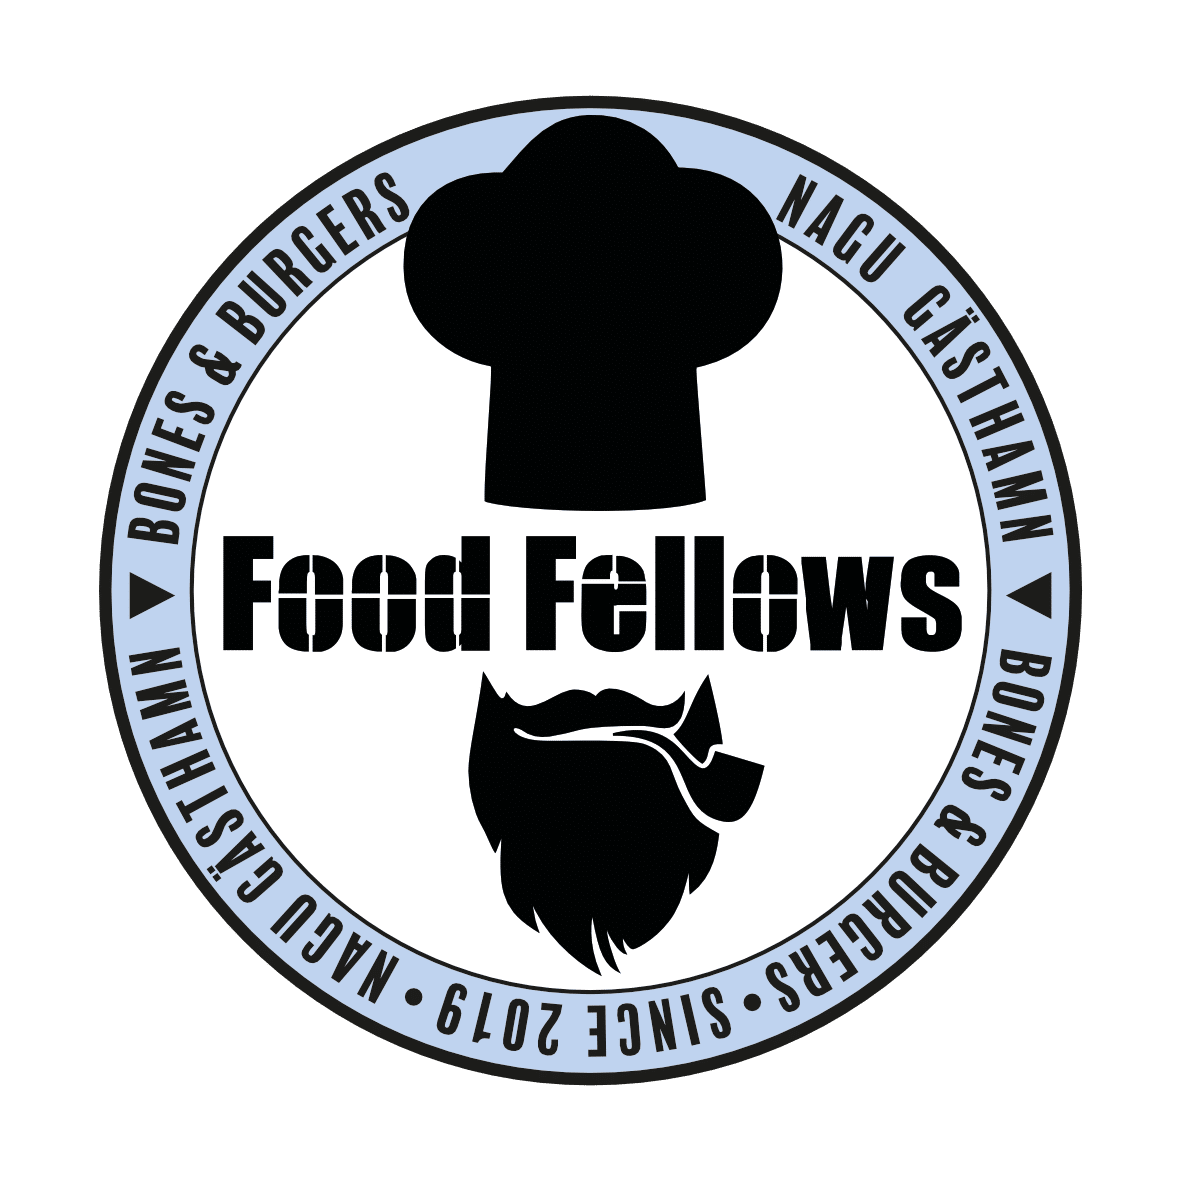 Five Food Fellows Ab